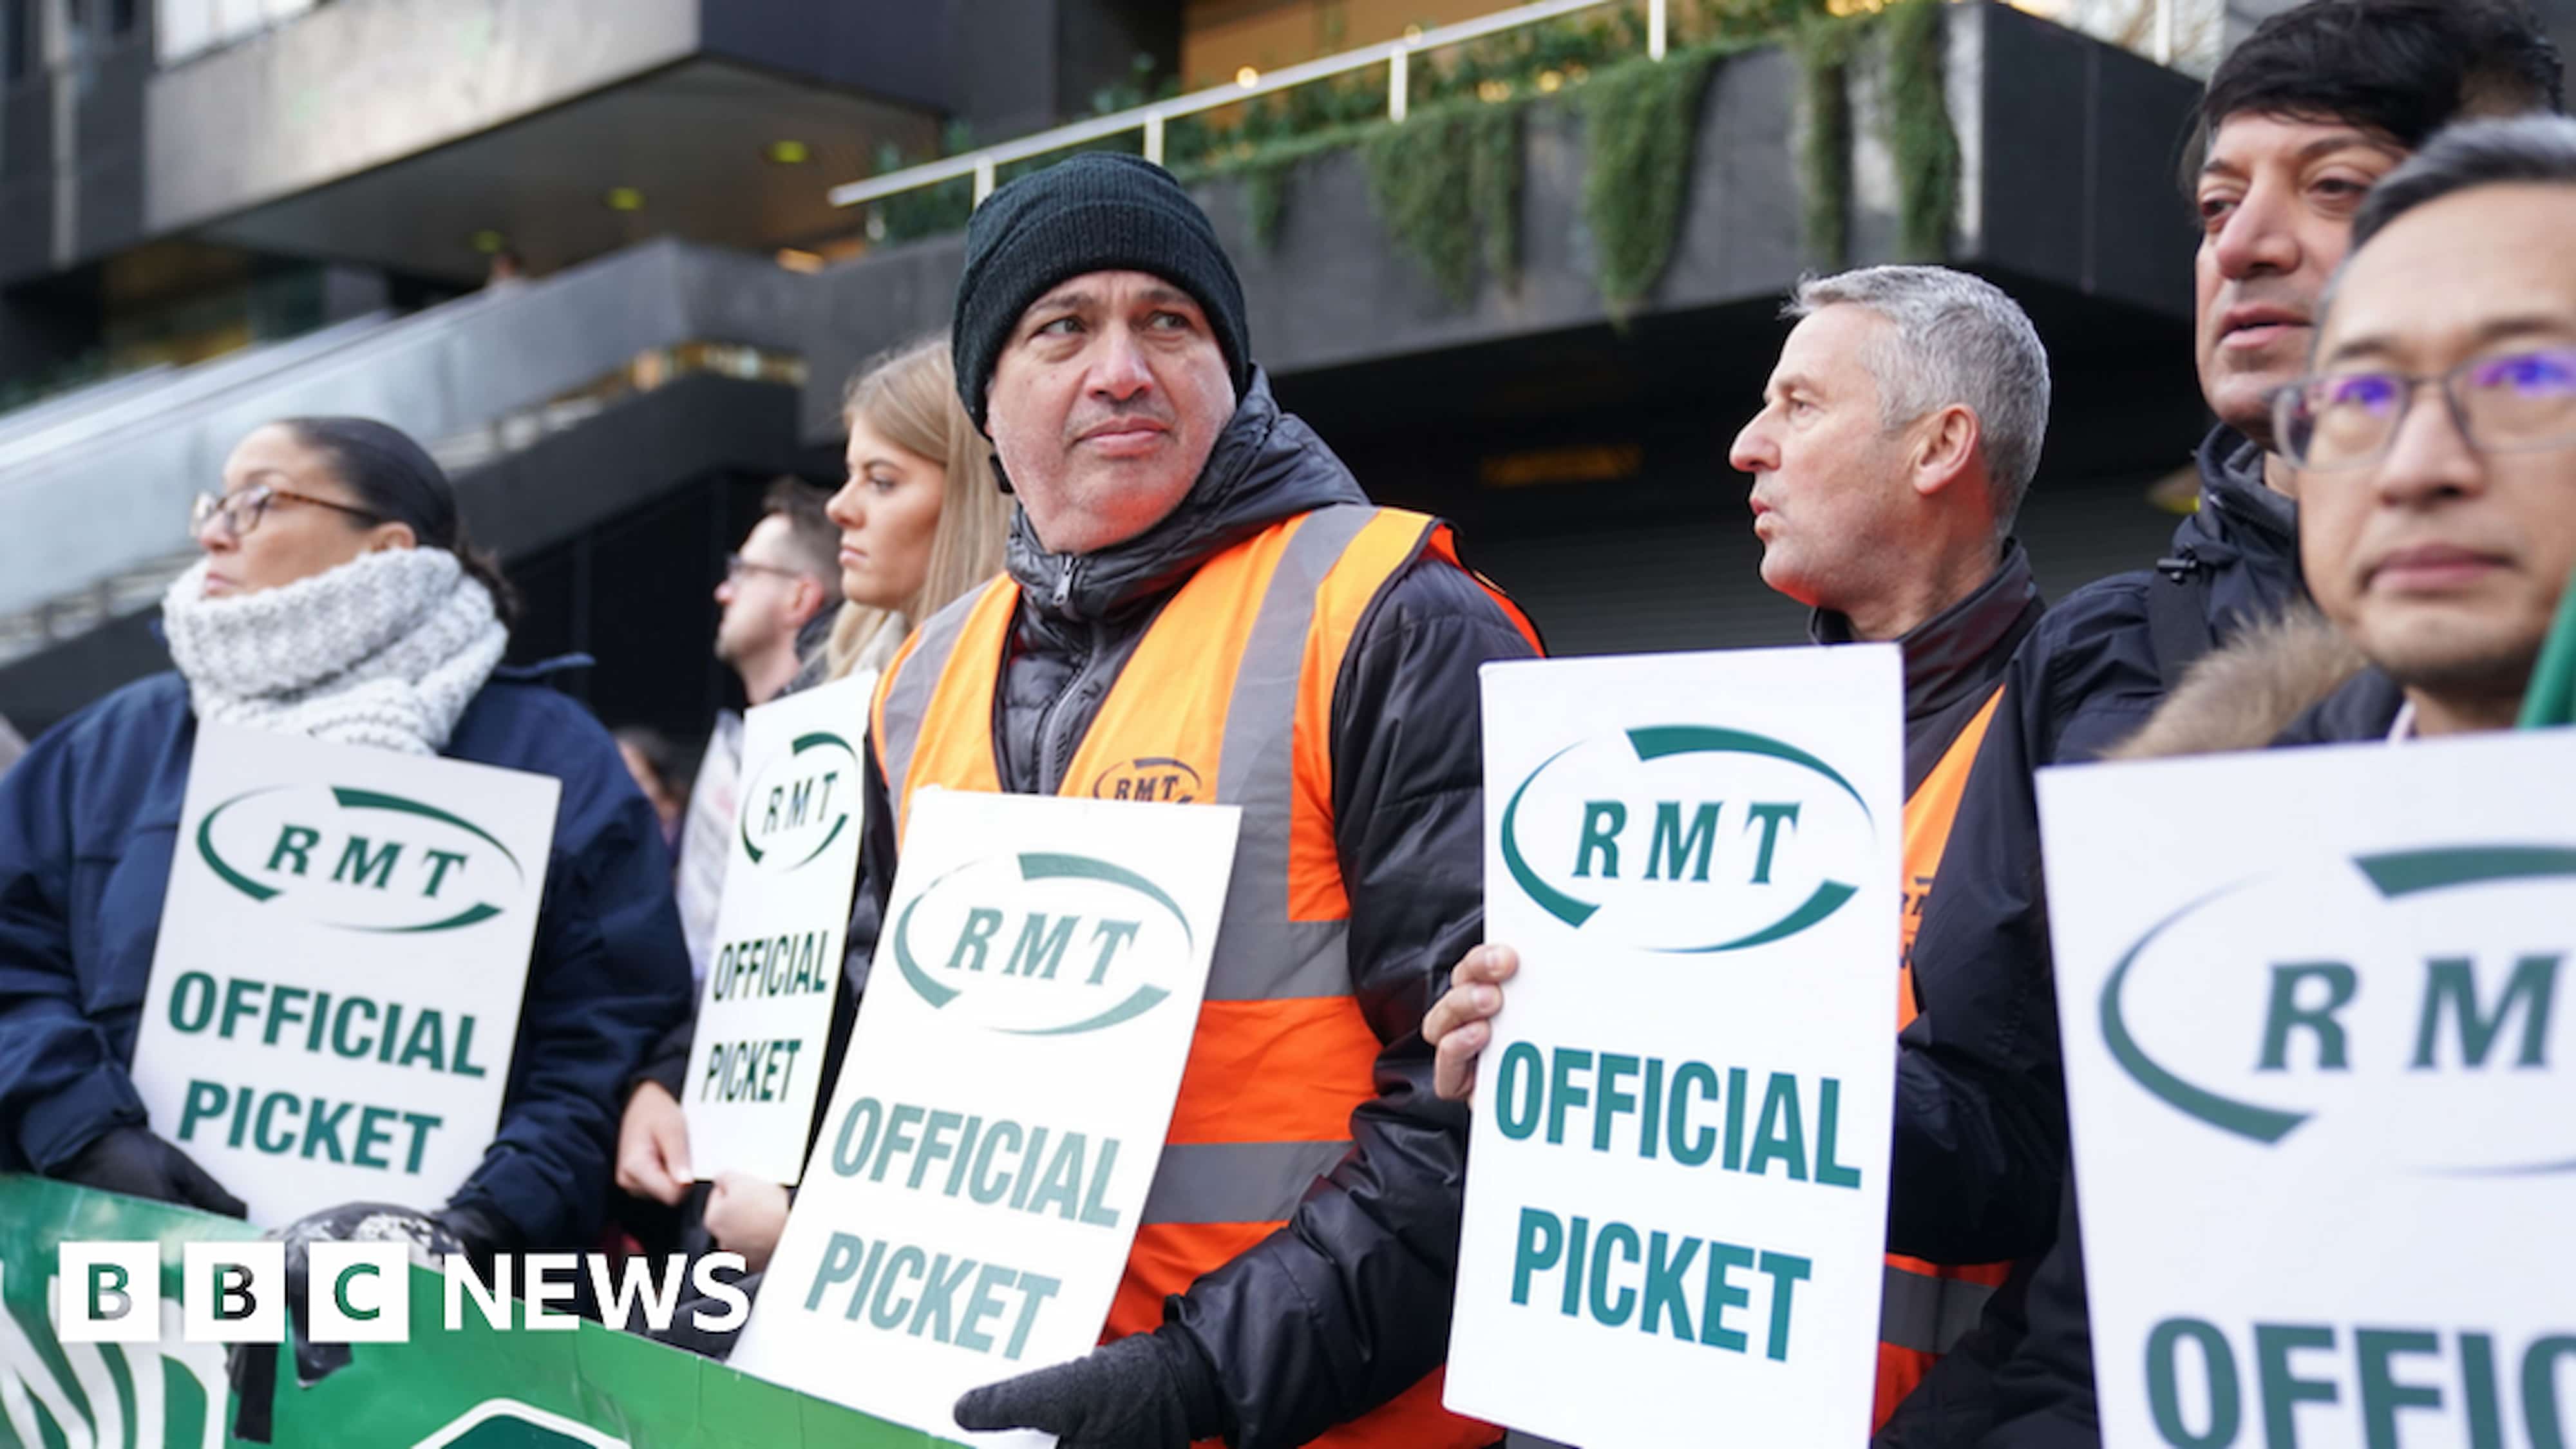 UK: Unions Criticize New Strike Laws